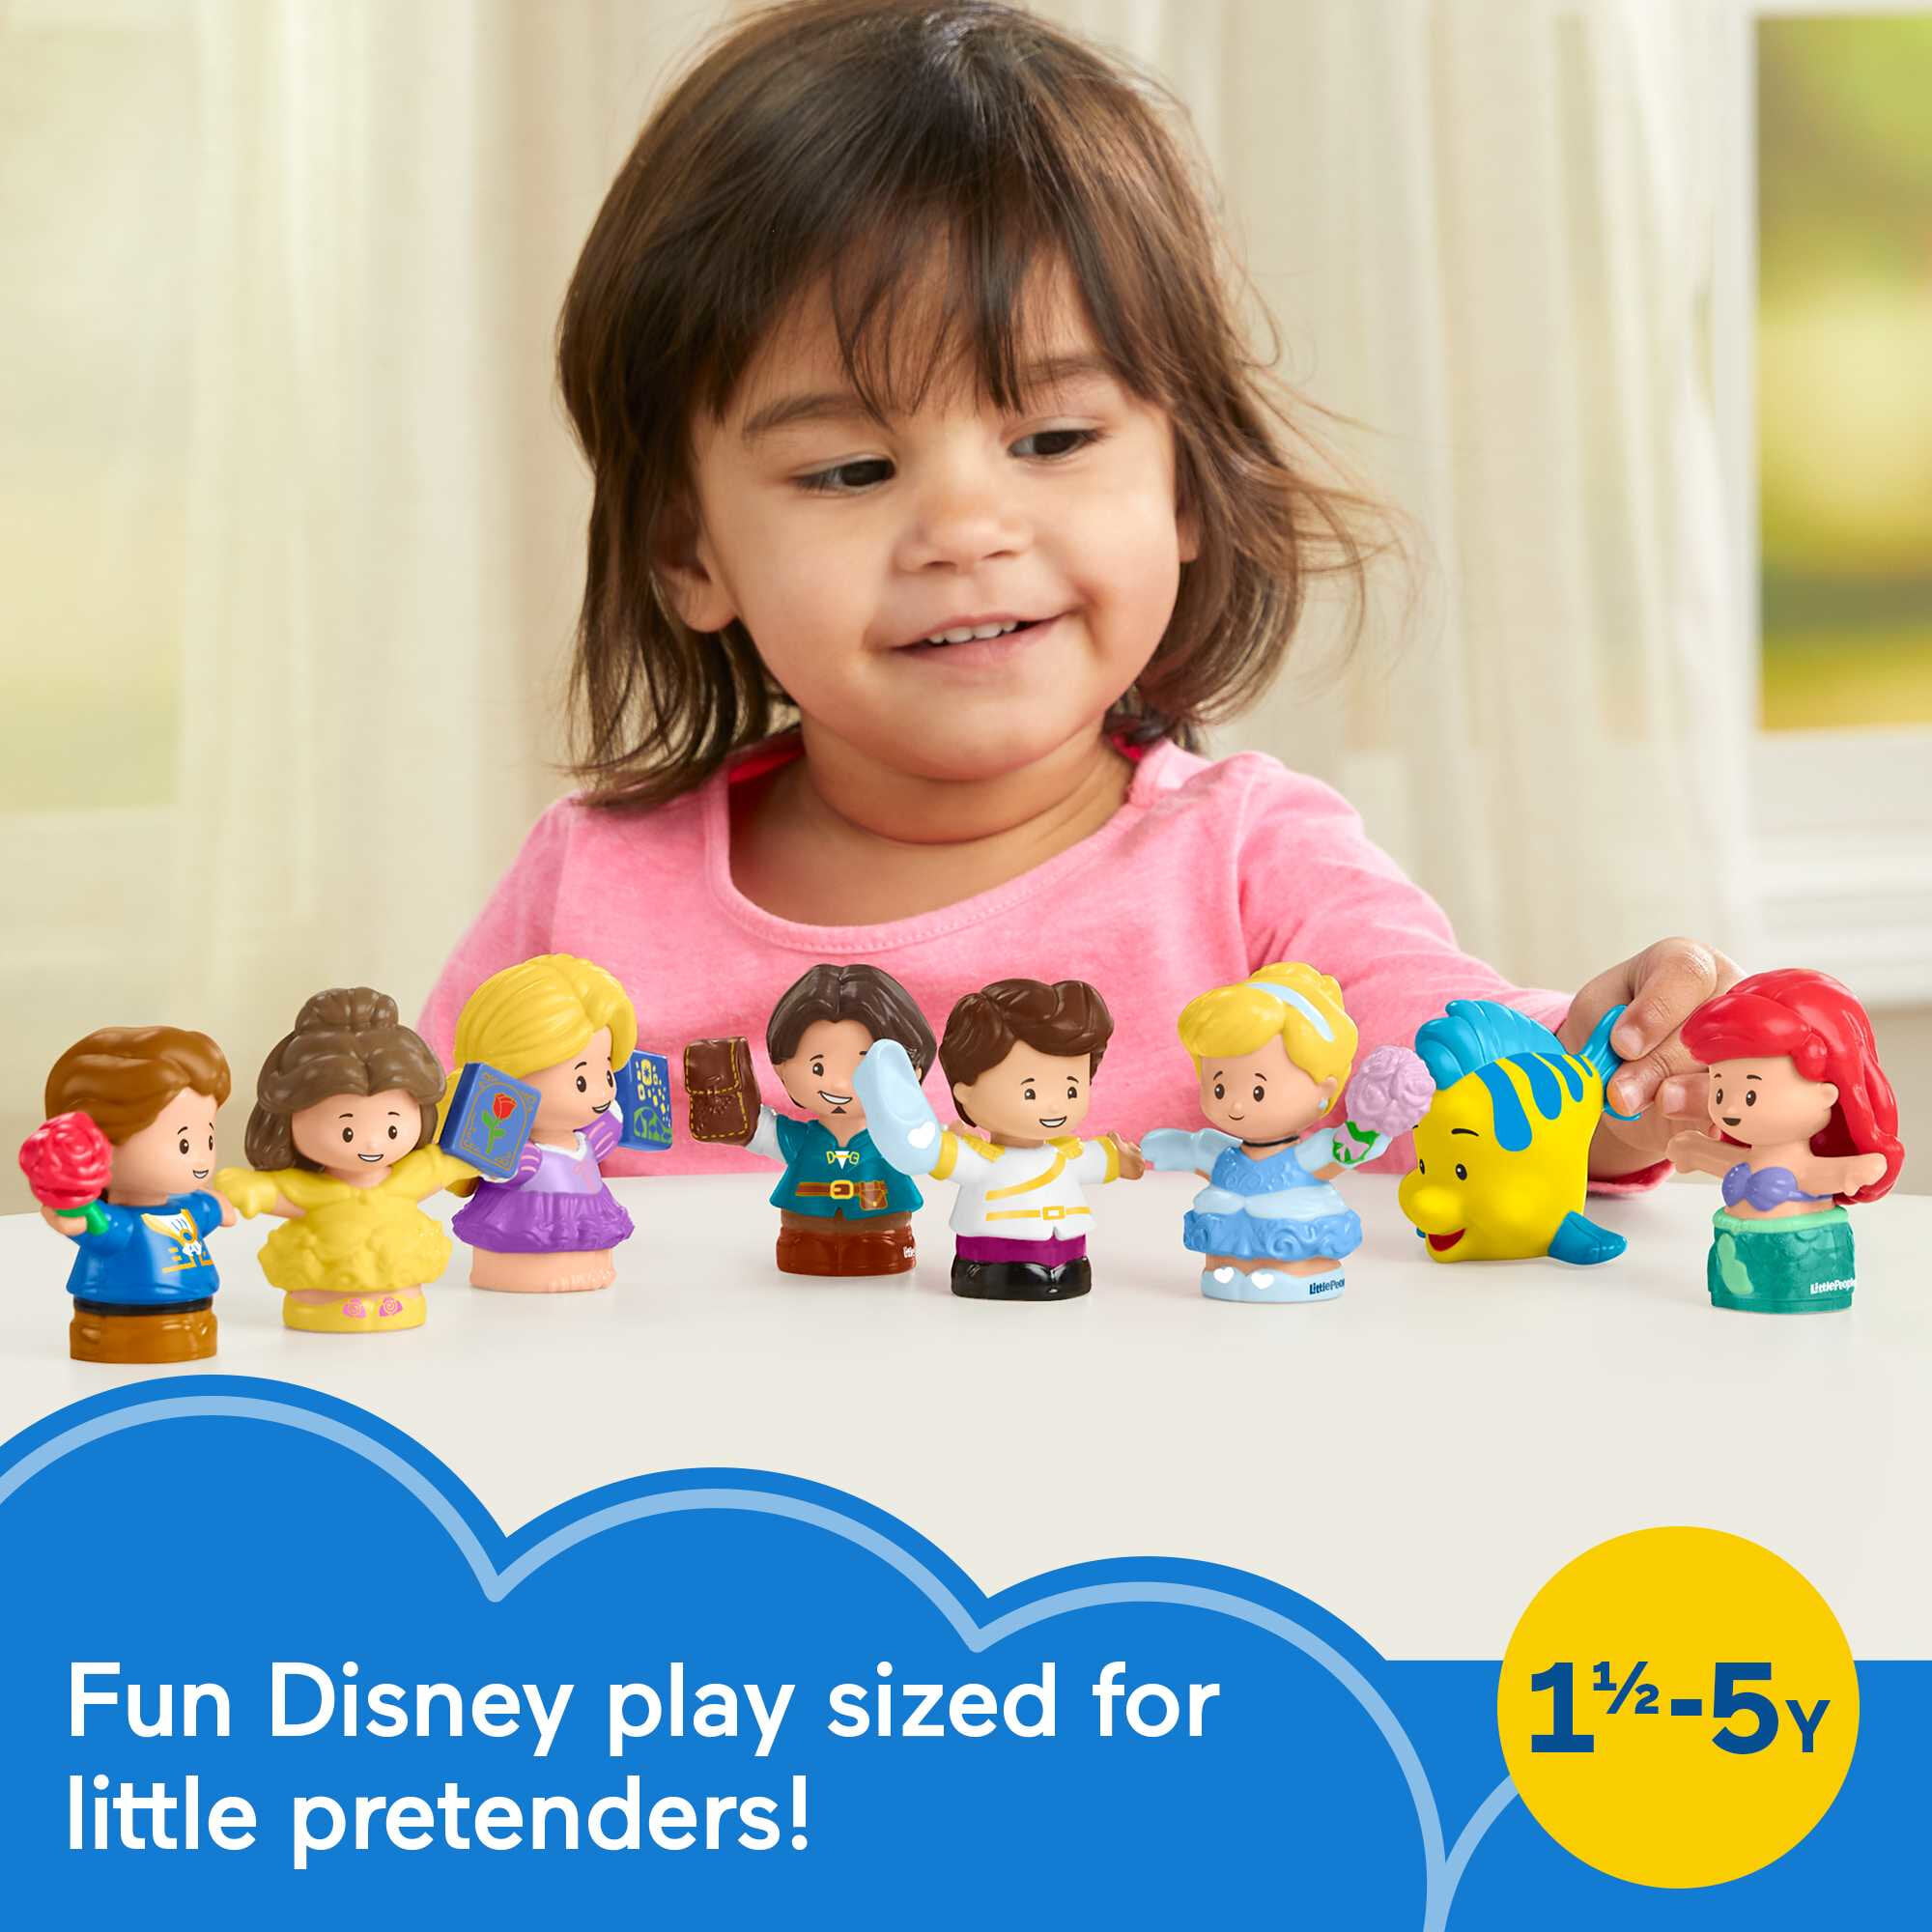 Disney Princess Rapunzel & Flynn Character Figures by Little People